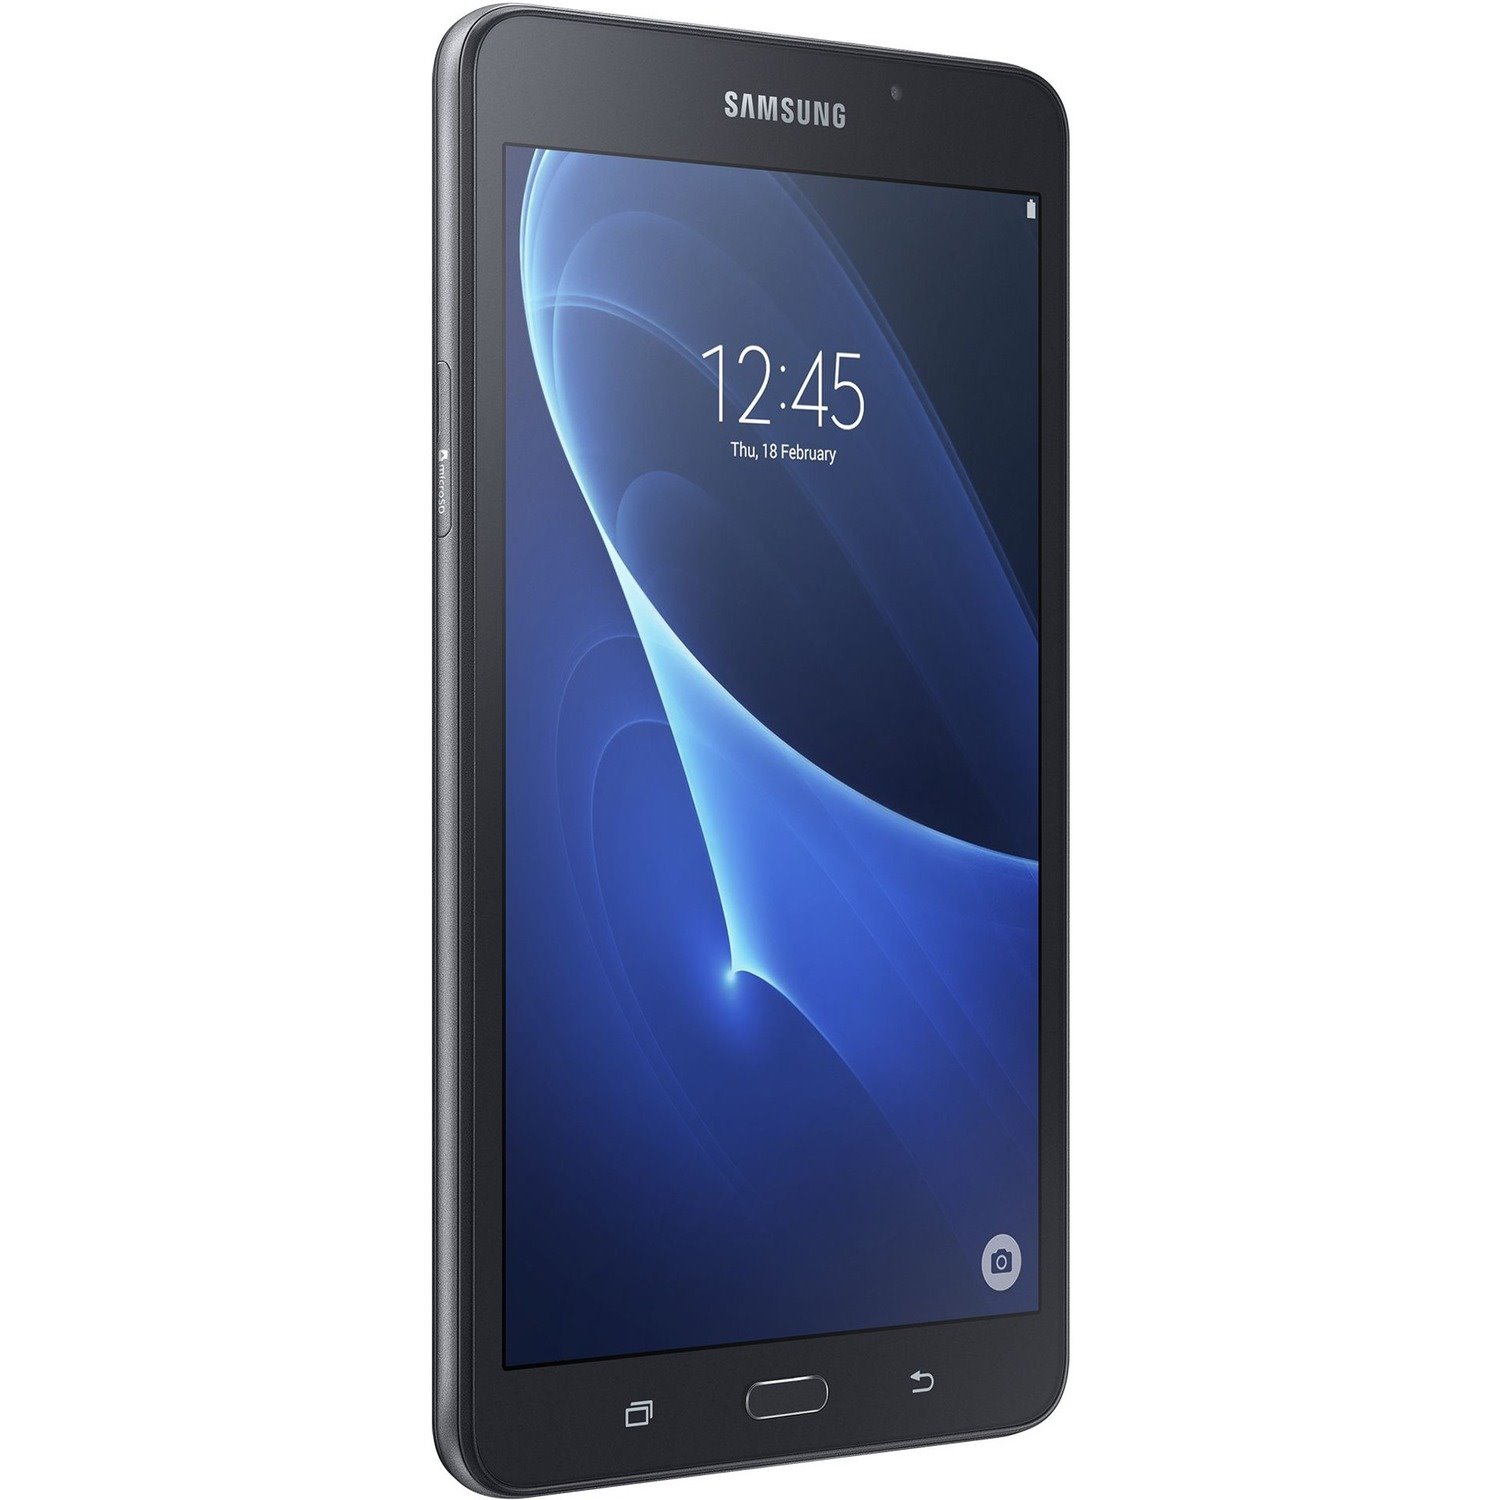 Samsung SM-T280 Tablet - 17.8 cm (7") - Qualcomm Snapdragon 410 MSM8916 - 1.50 GB - 8 GB Storage - Android 5.1 Lollipop - Metallic Black